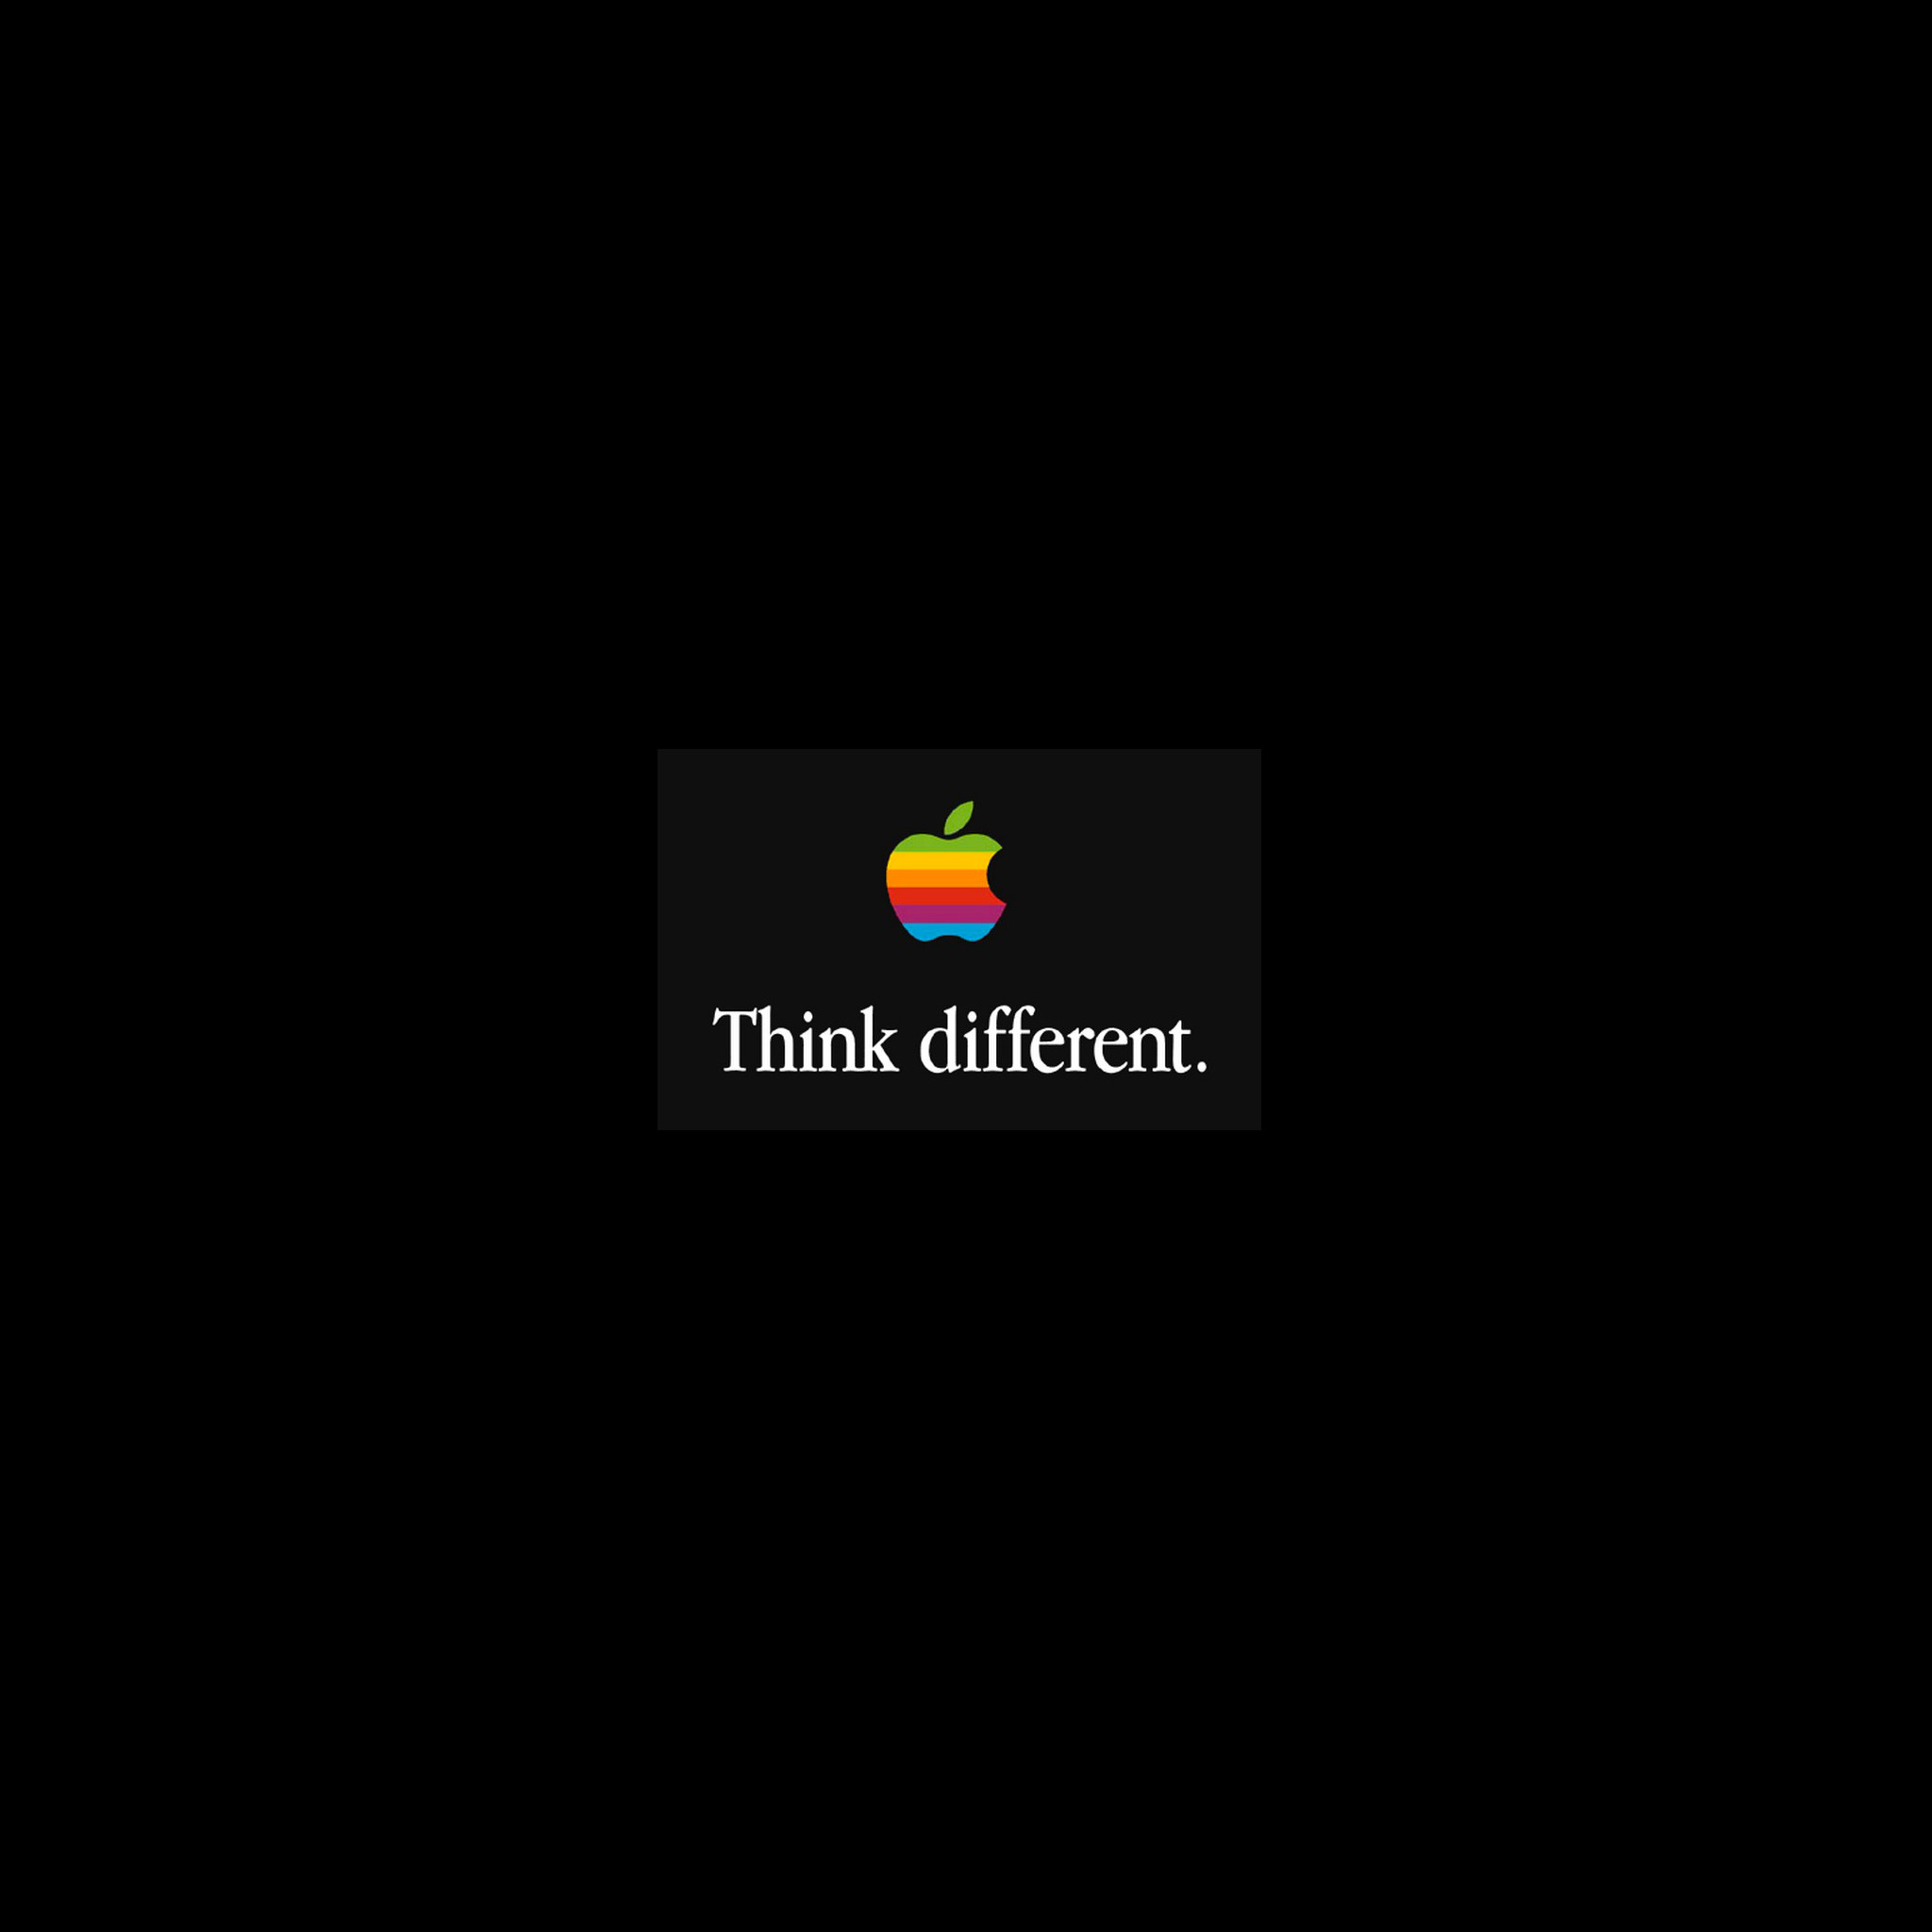 2048x2048 Apple-Think-Different-3Wallpapers-ipad-Retina